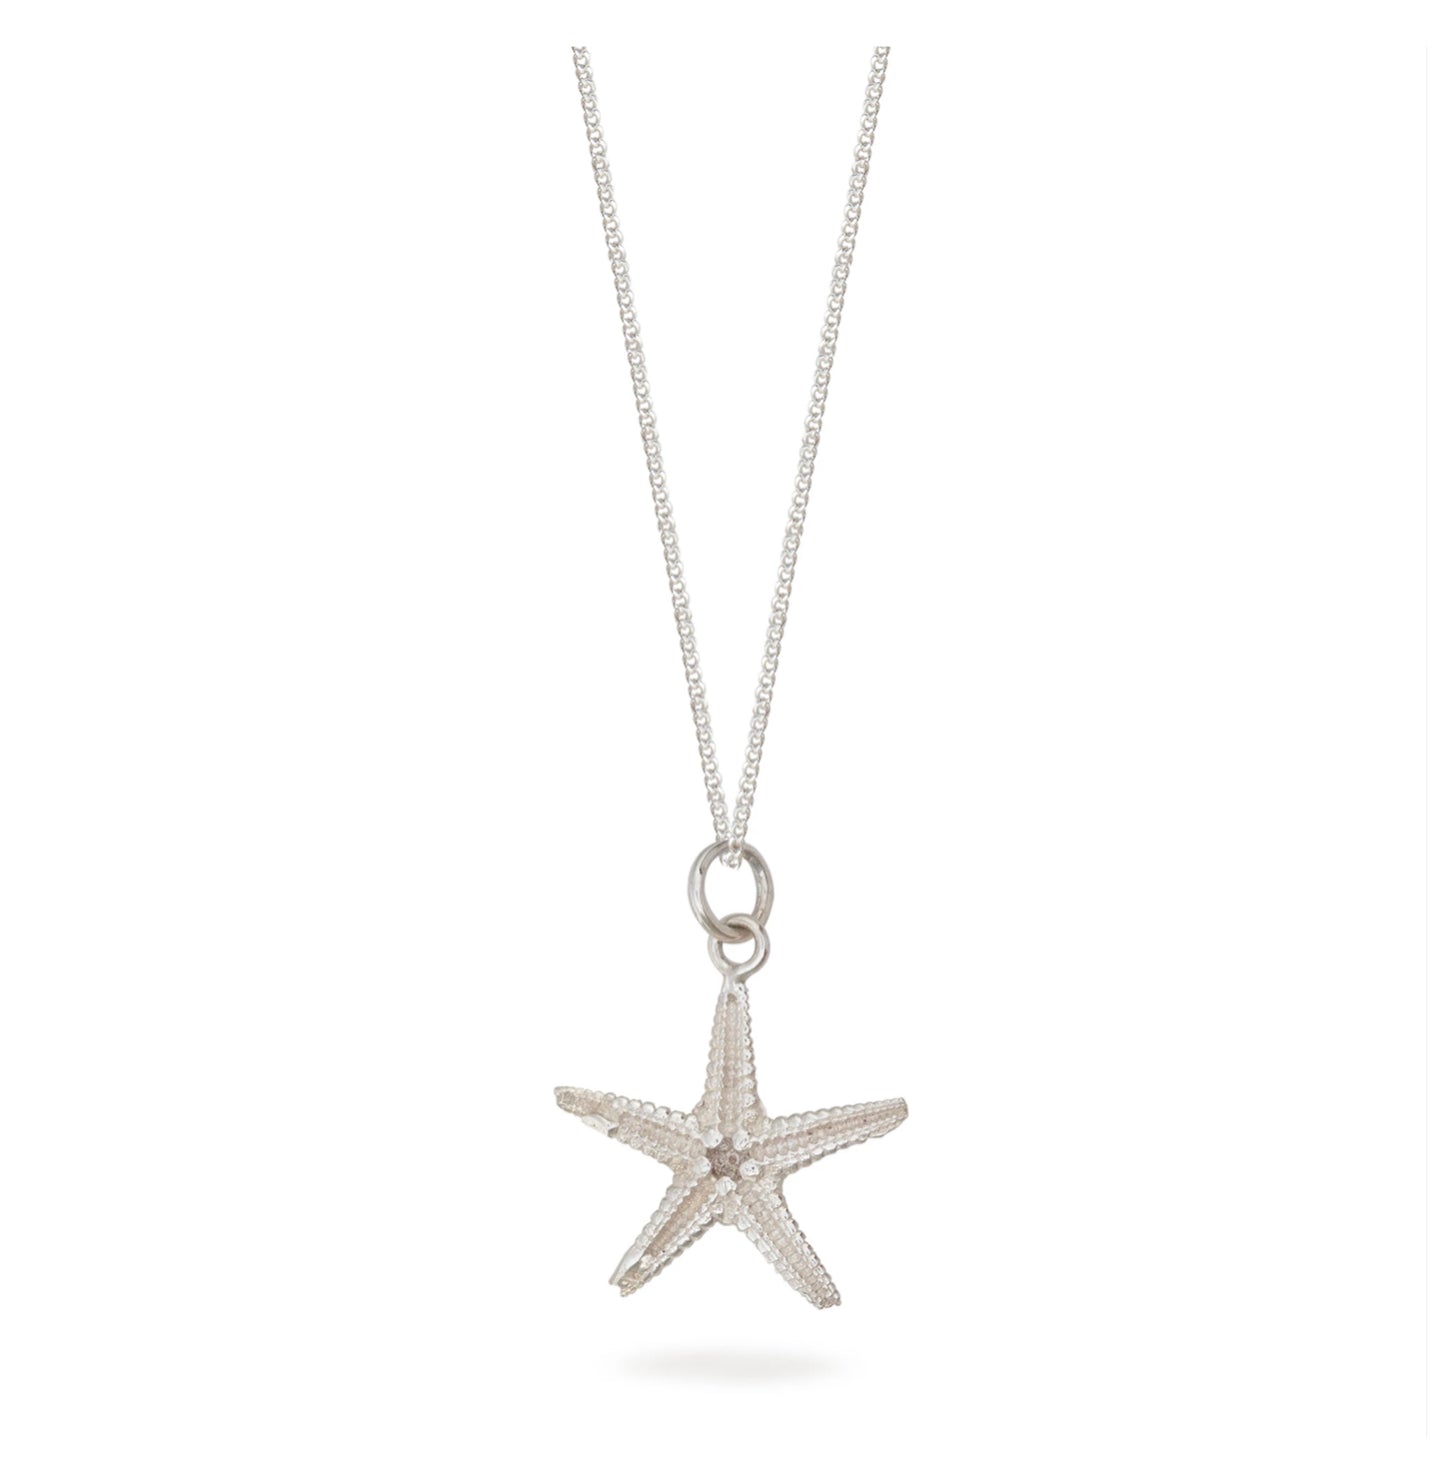 Starfish charm pendant